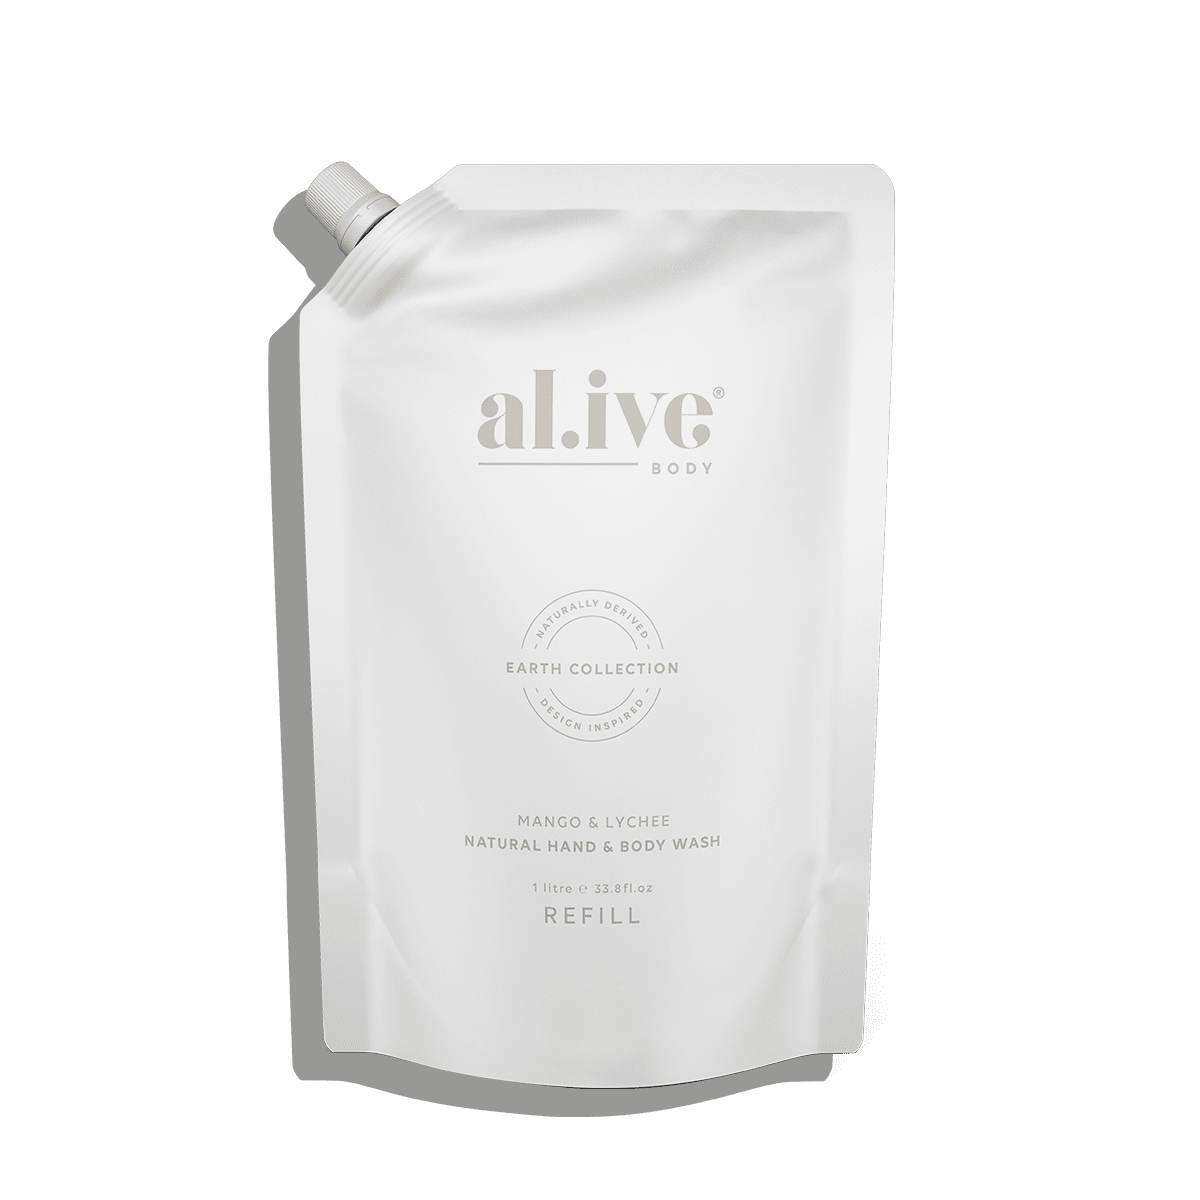 Impodimo Living & Giving:Mango & Lychee Wash - Refill:Alive Body